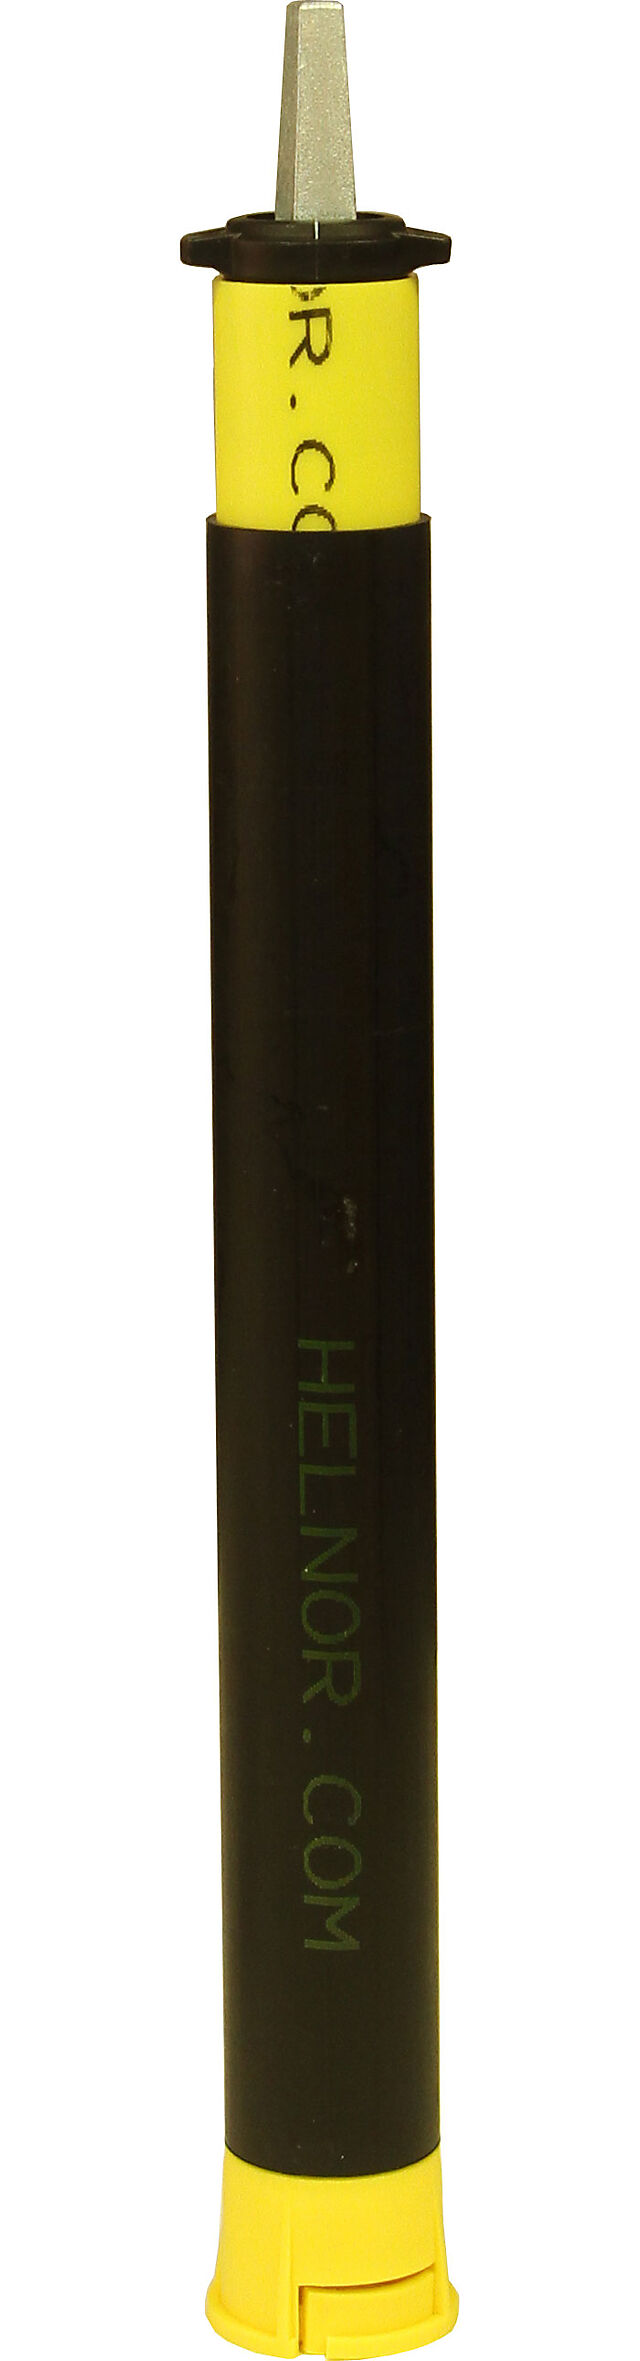 Helnor Spindelforlenger 60 - 94 cm XS0,5 Helnor 1